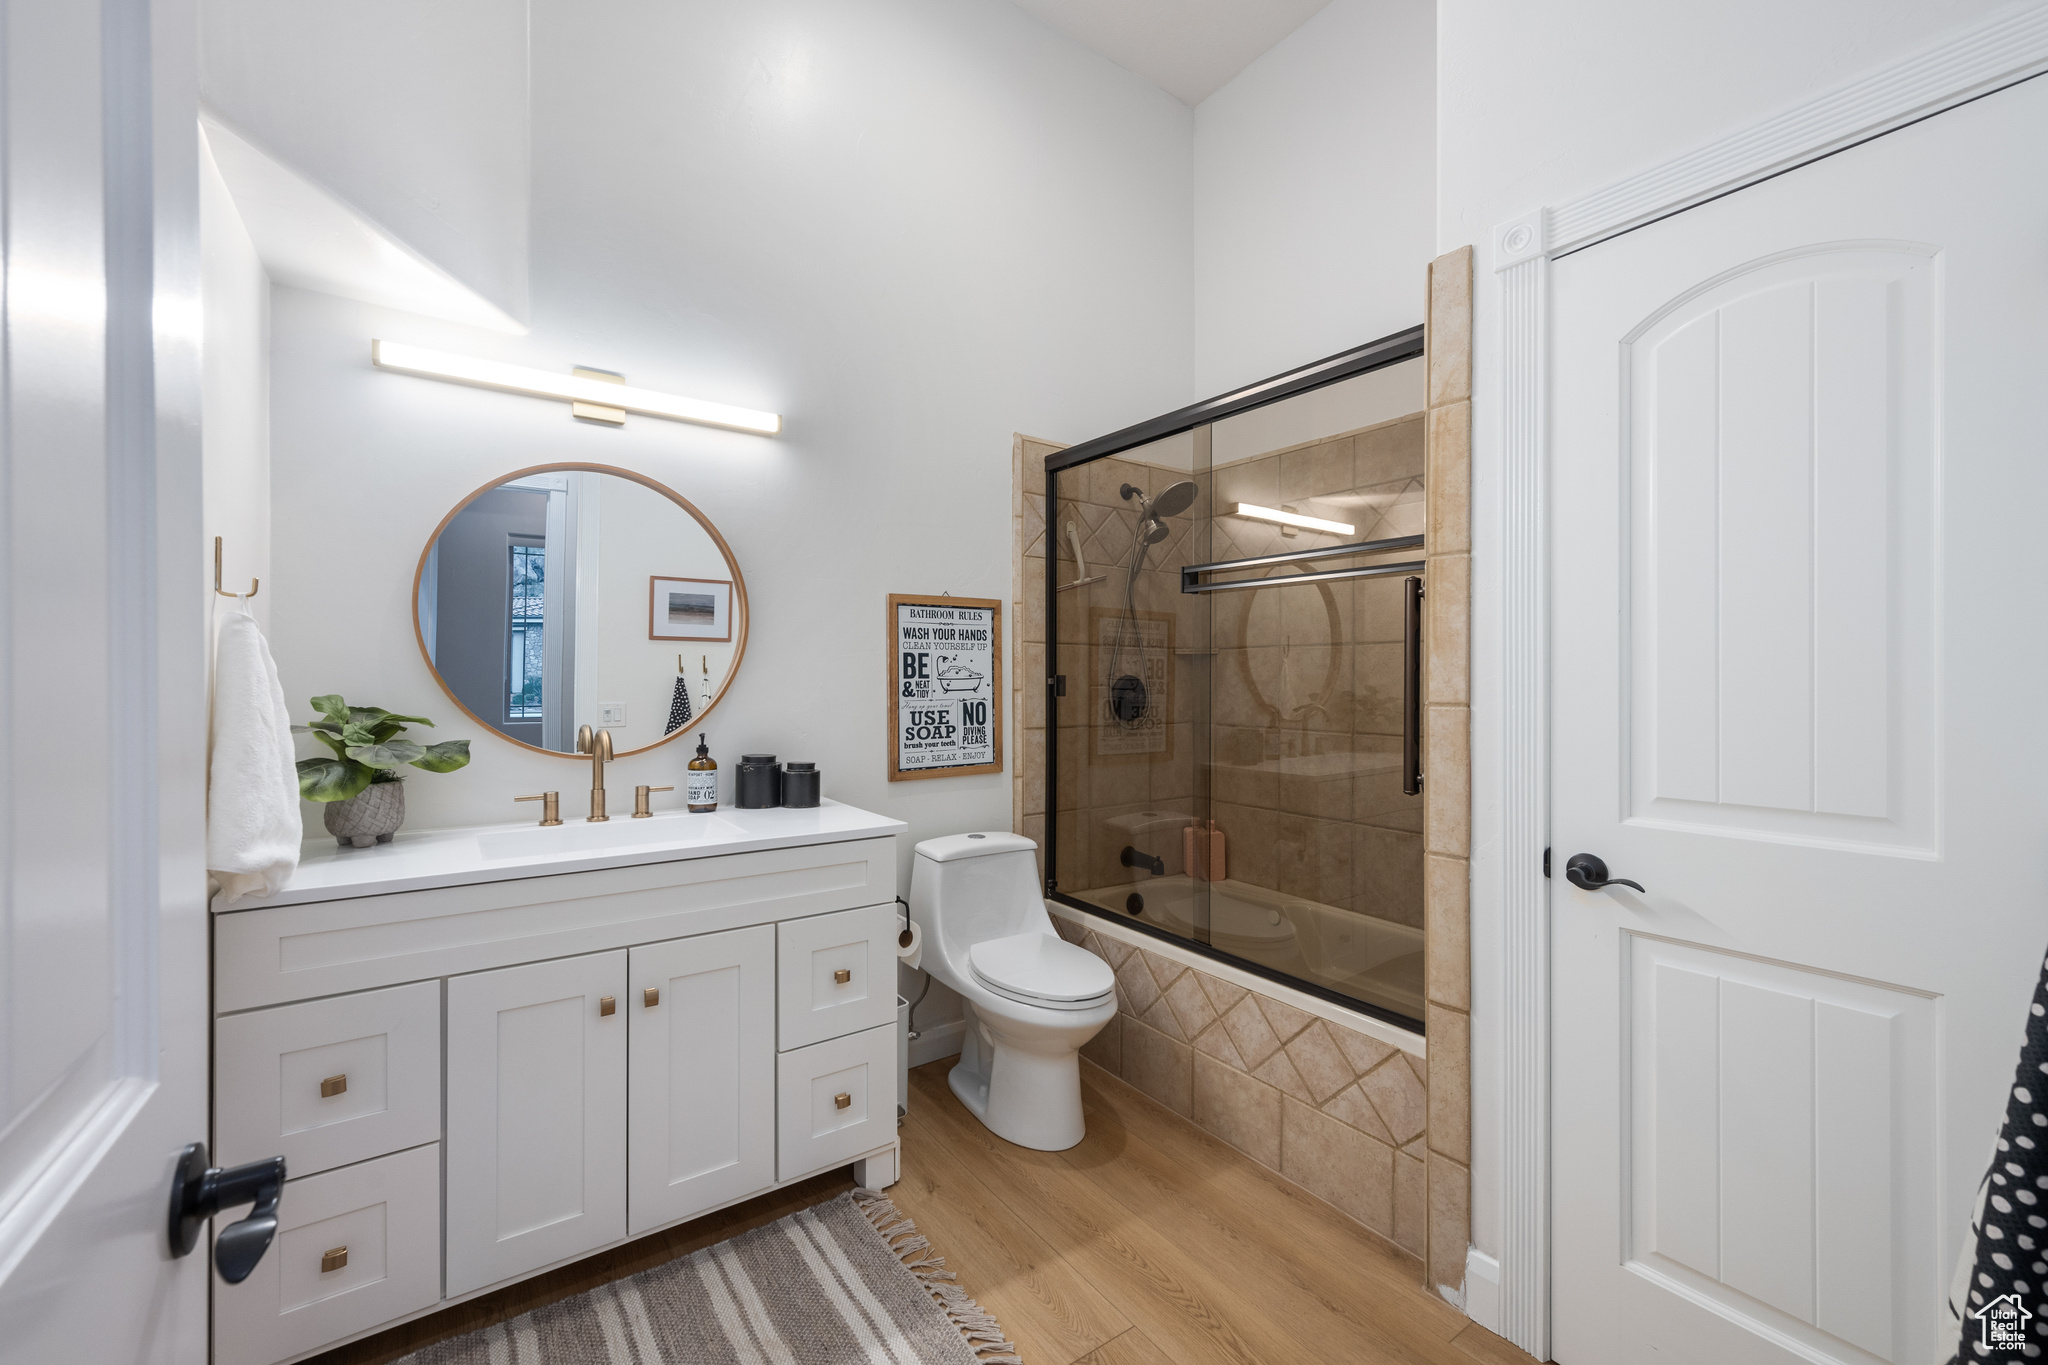 Full bathroom with vanity, toilet, bath / shower combo with glass door, and wood-type flooring